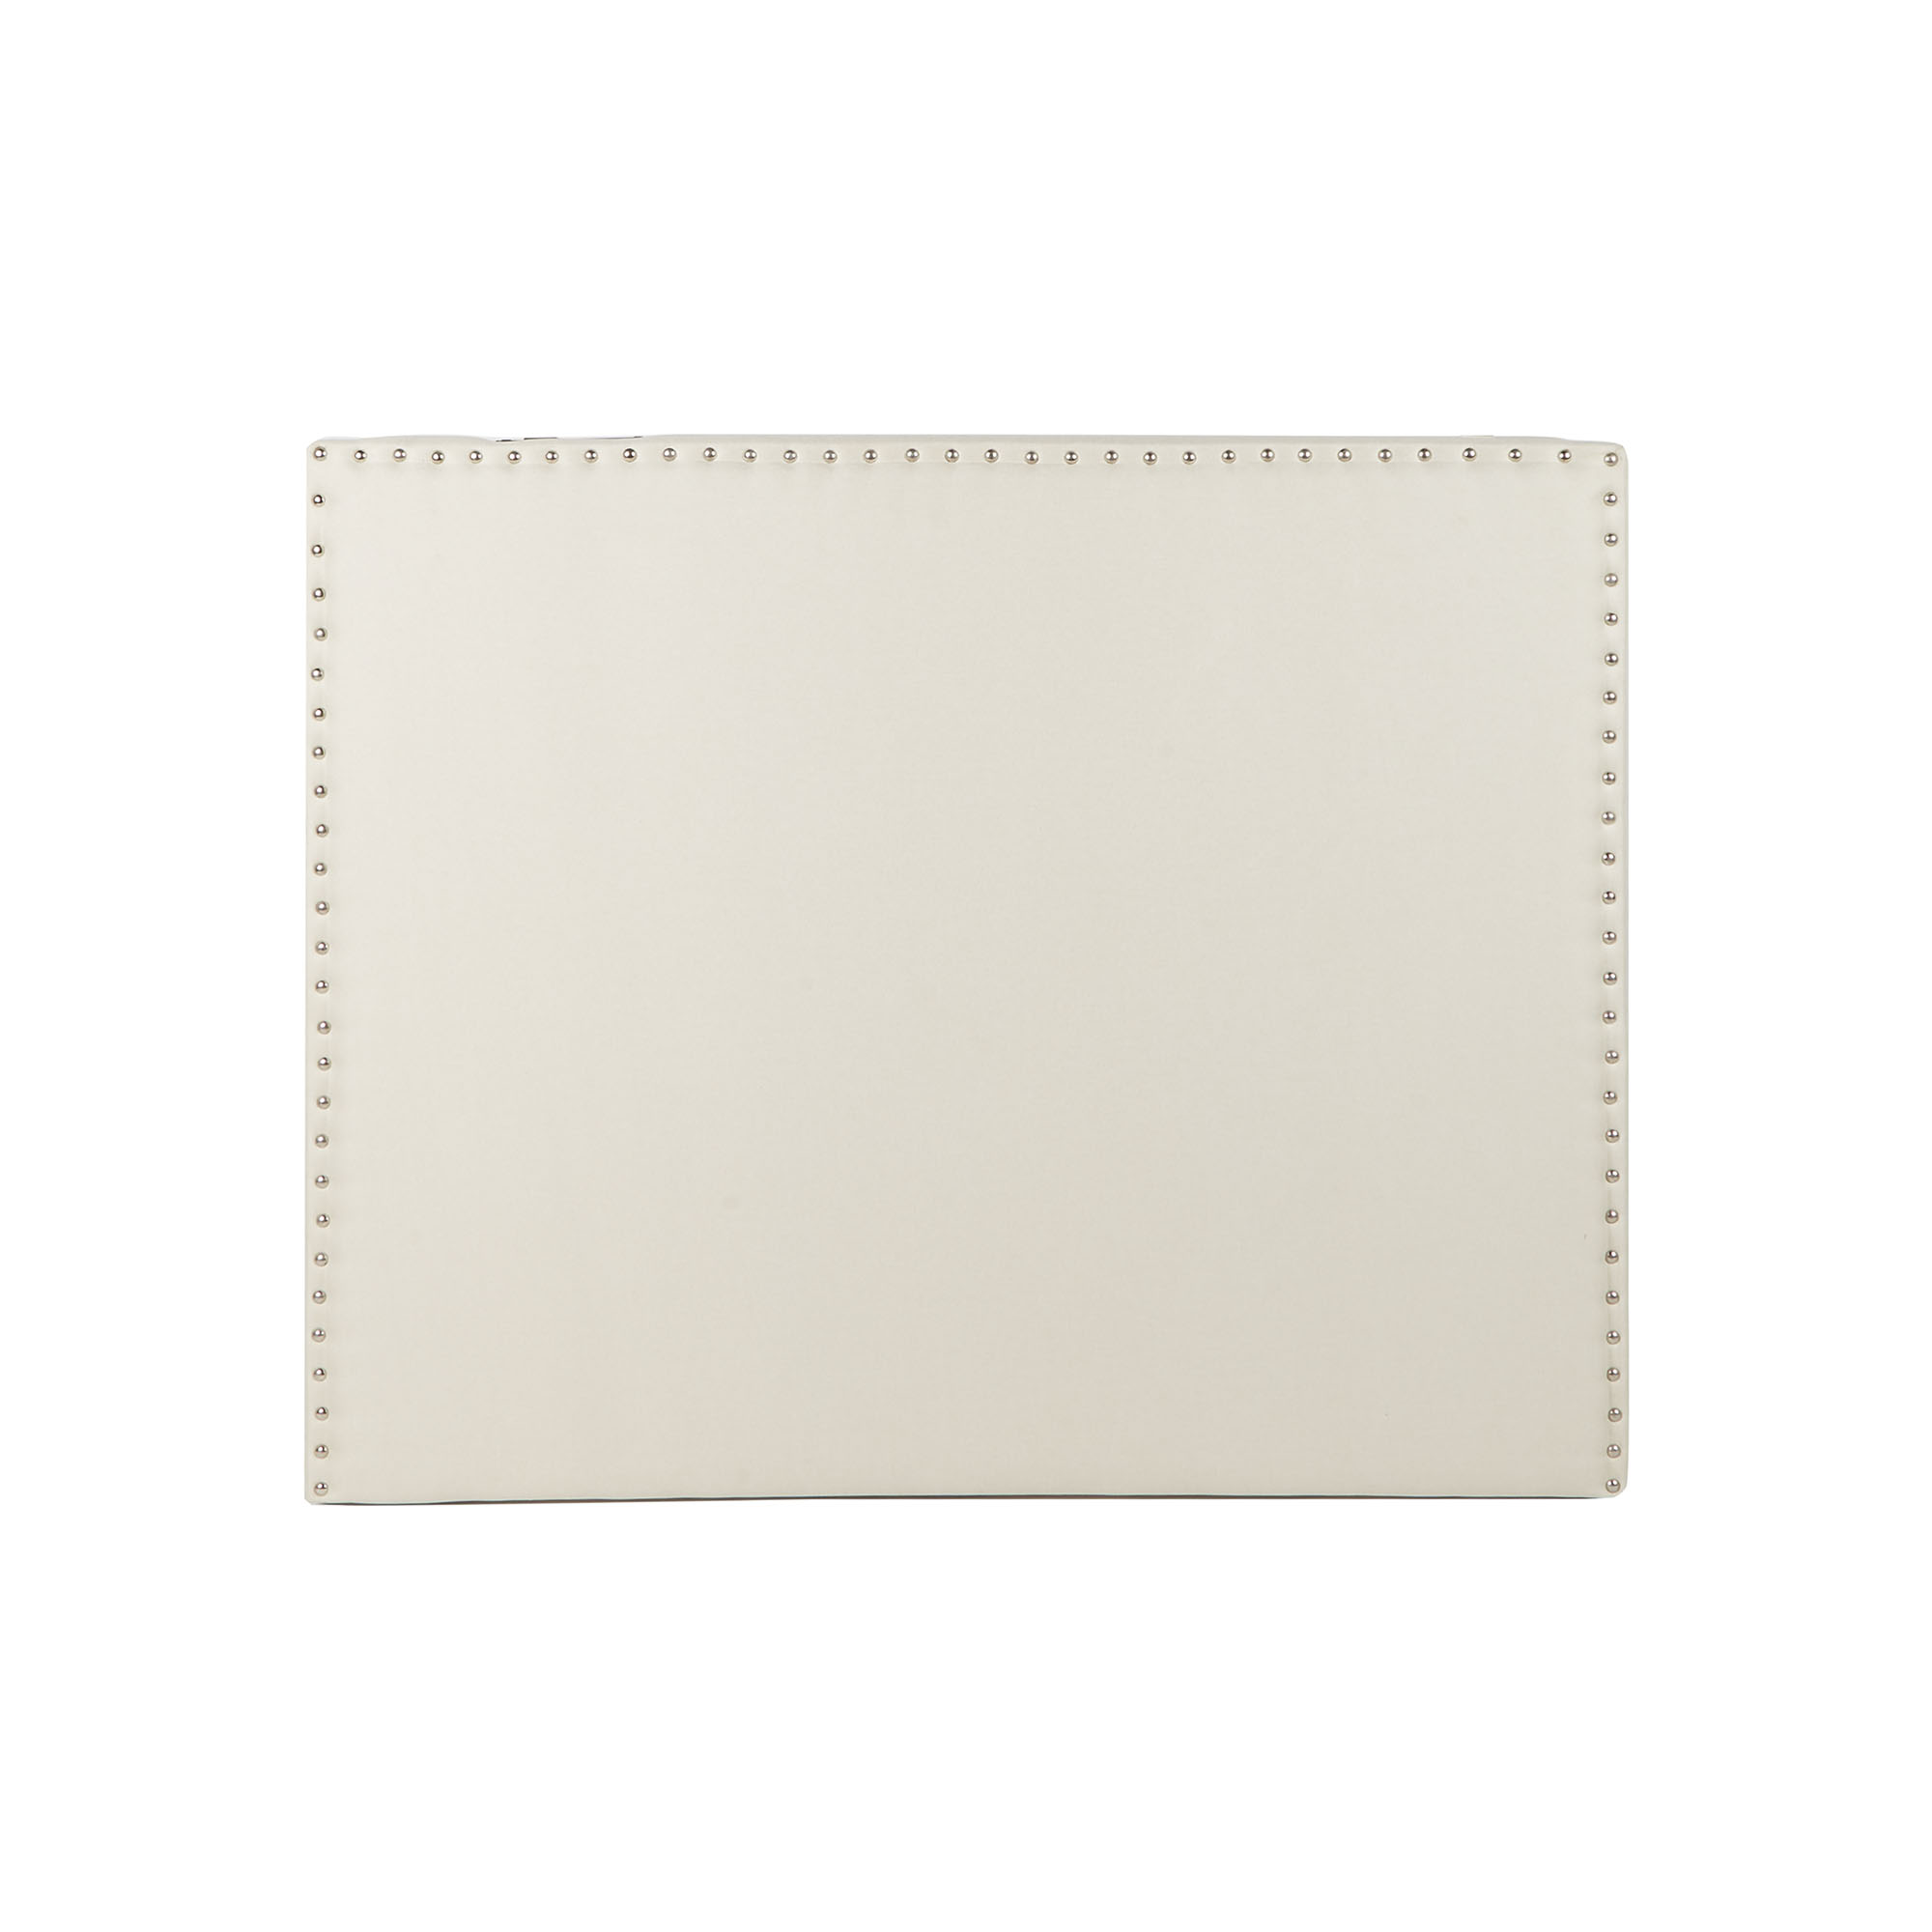 Mainstays Modern Upholstered Polyester Twin Headboard, Vanilla Finish - image 4 of 5